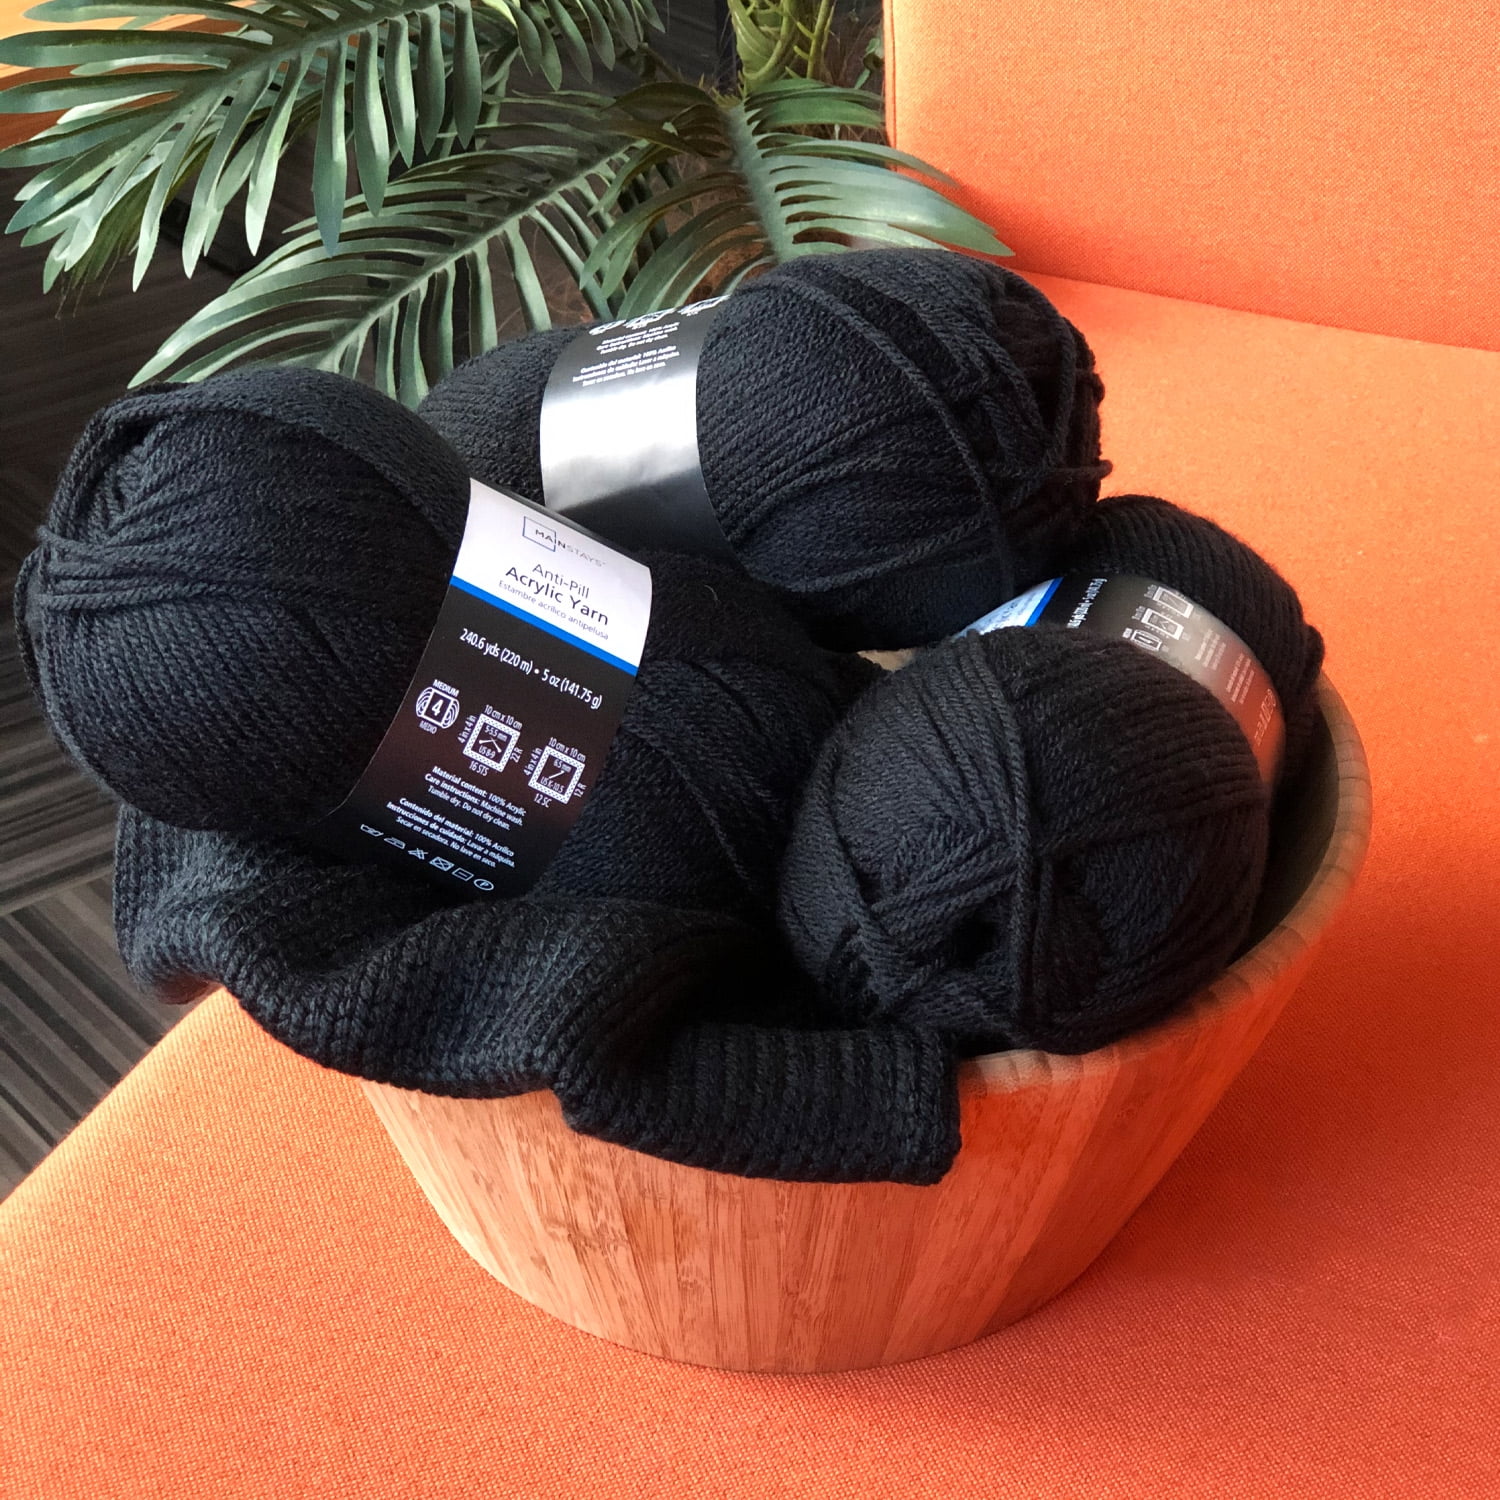 NIGHTFALL Black White Basic Stitch Anti-pilling Yarn Wt 4 Worsted Acrylic  Machine Wash Dry Knit Crochet Fiber Art DIY Project Supply 6705 